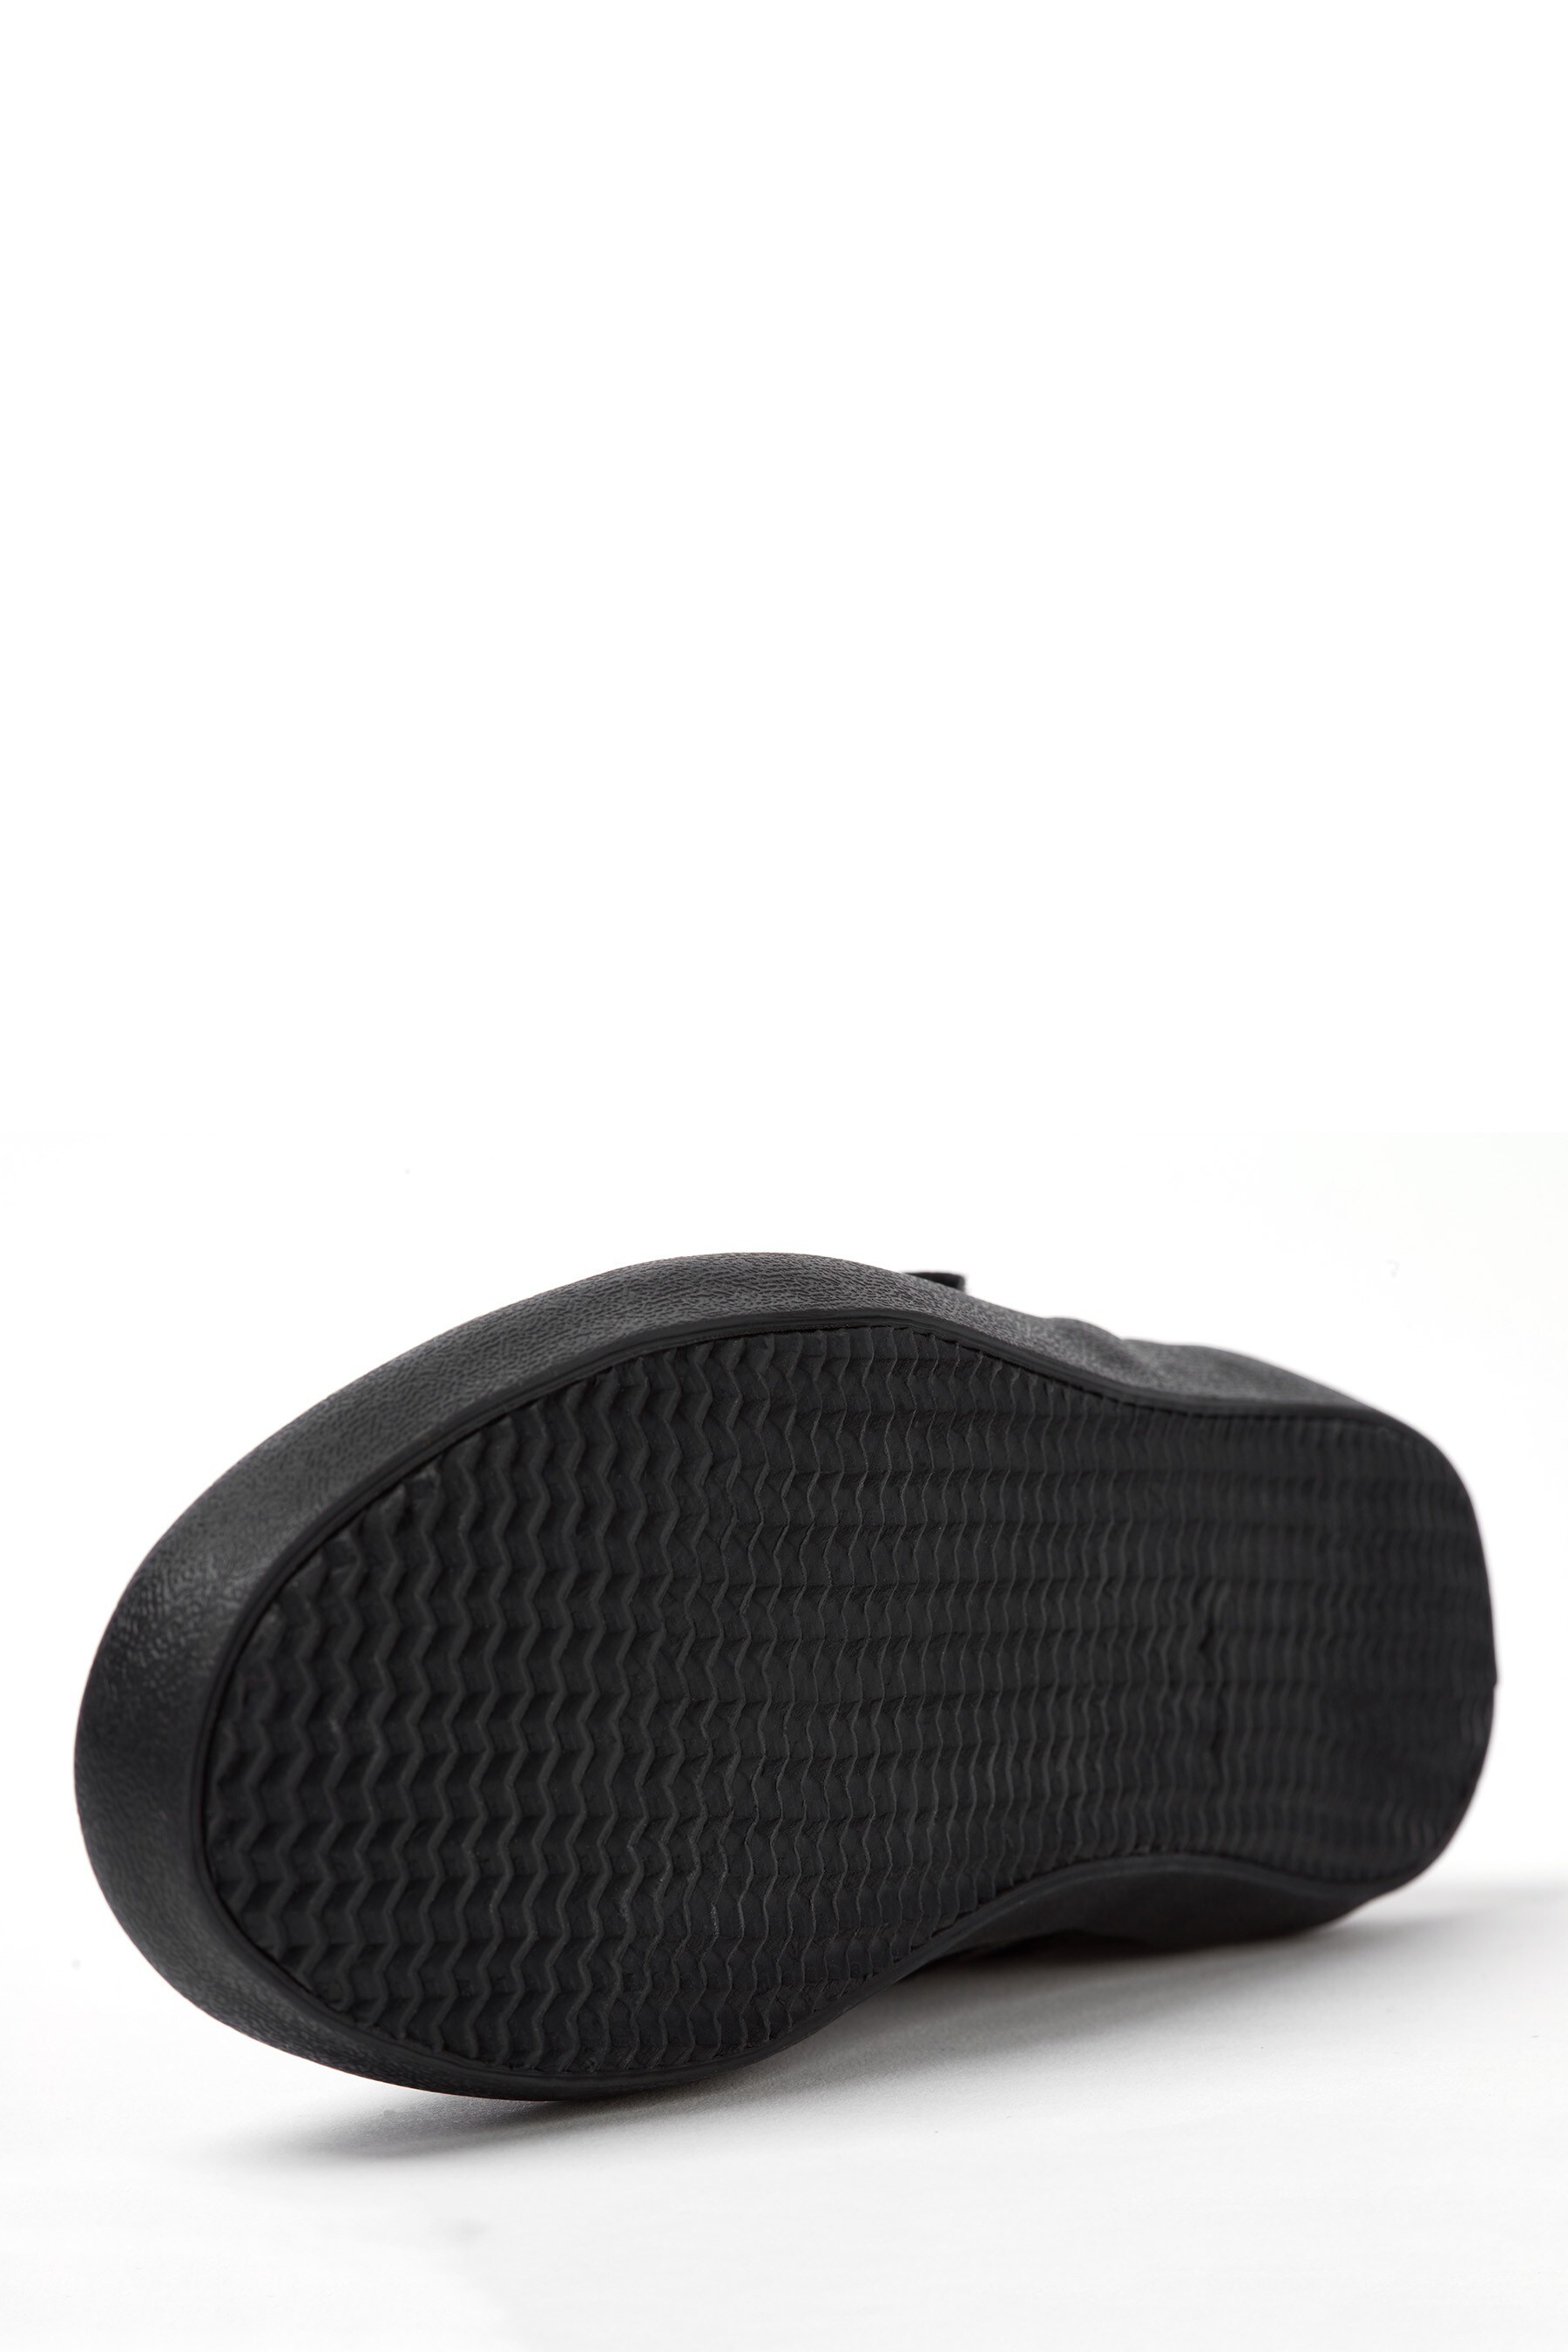 Buy Kickers Junior Kariko T-Bar Hook and Loop Patent Leather Shoes from ...